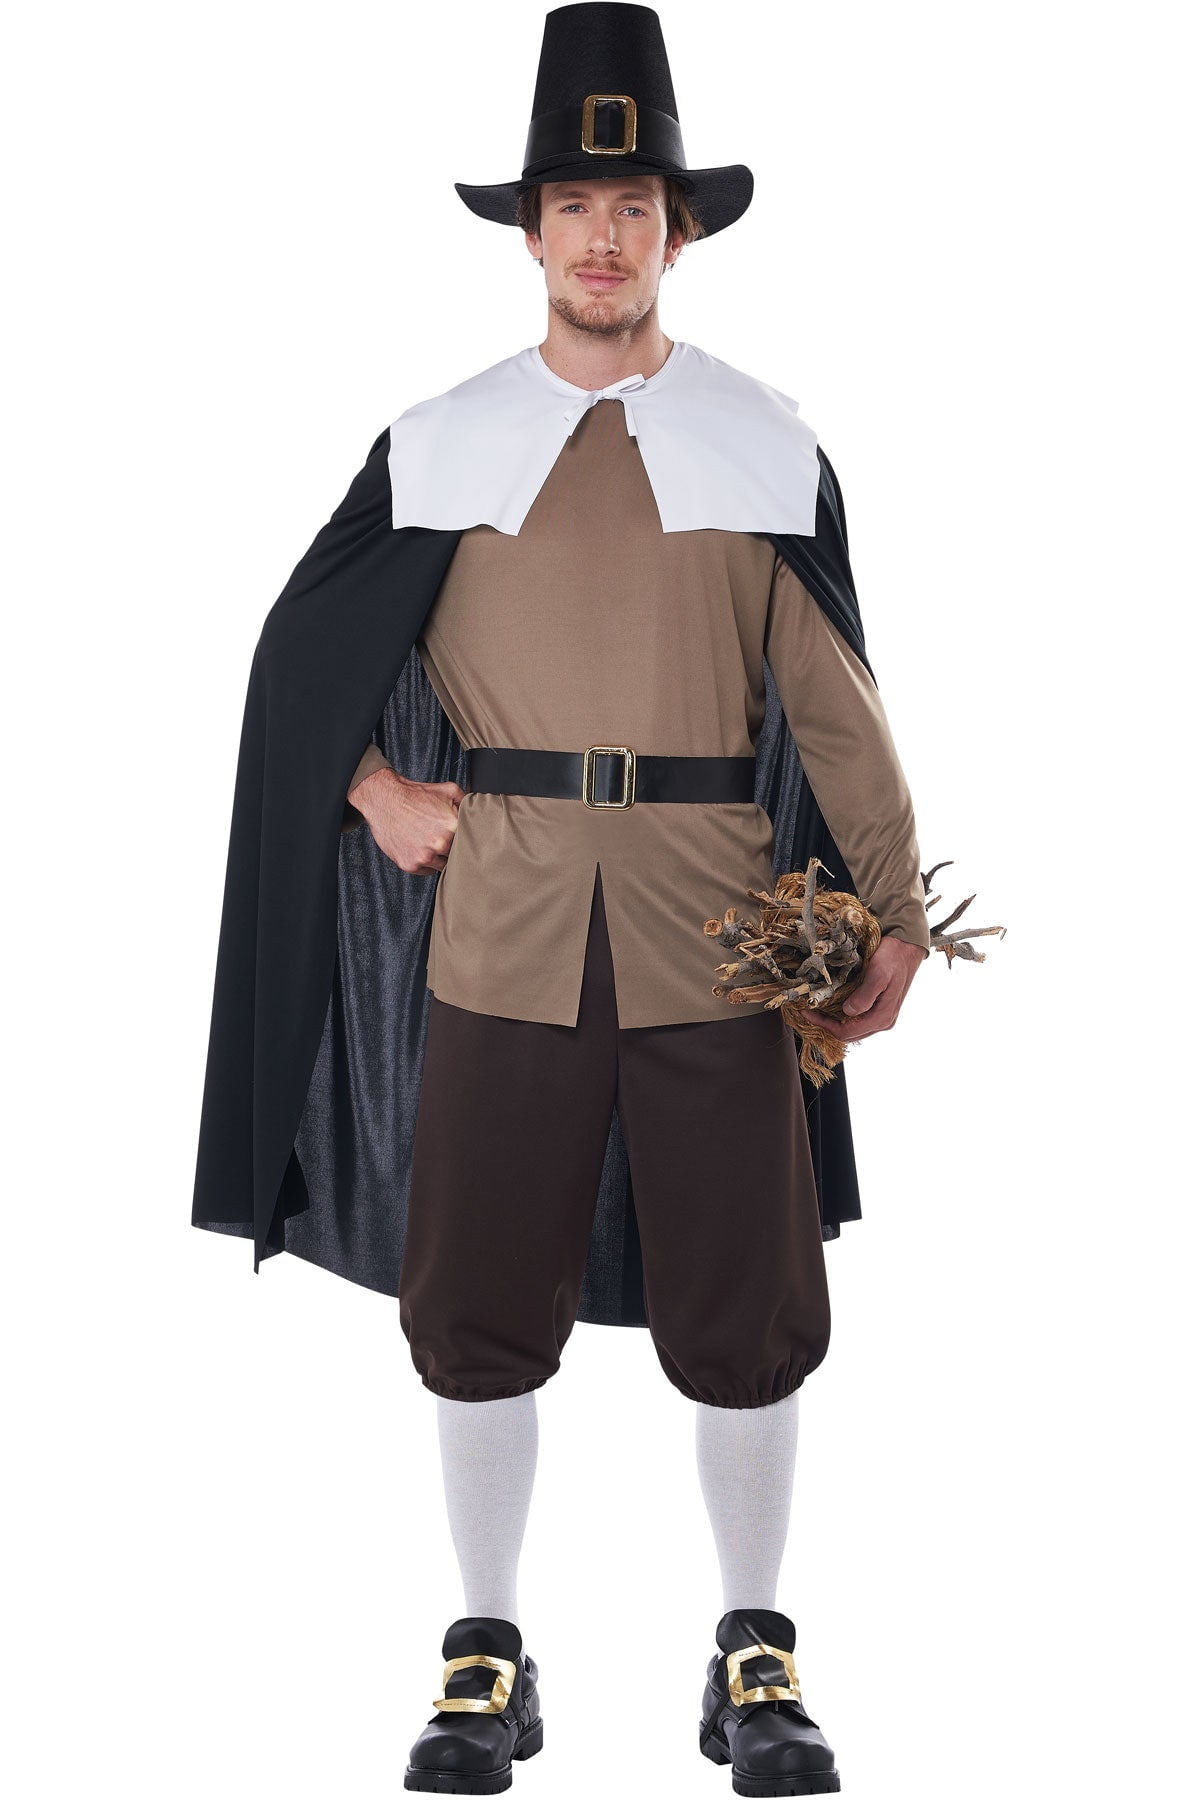 Adult Men's Mayflower Pilgrim Costume - Walmart.com